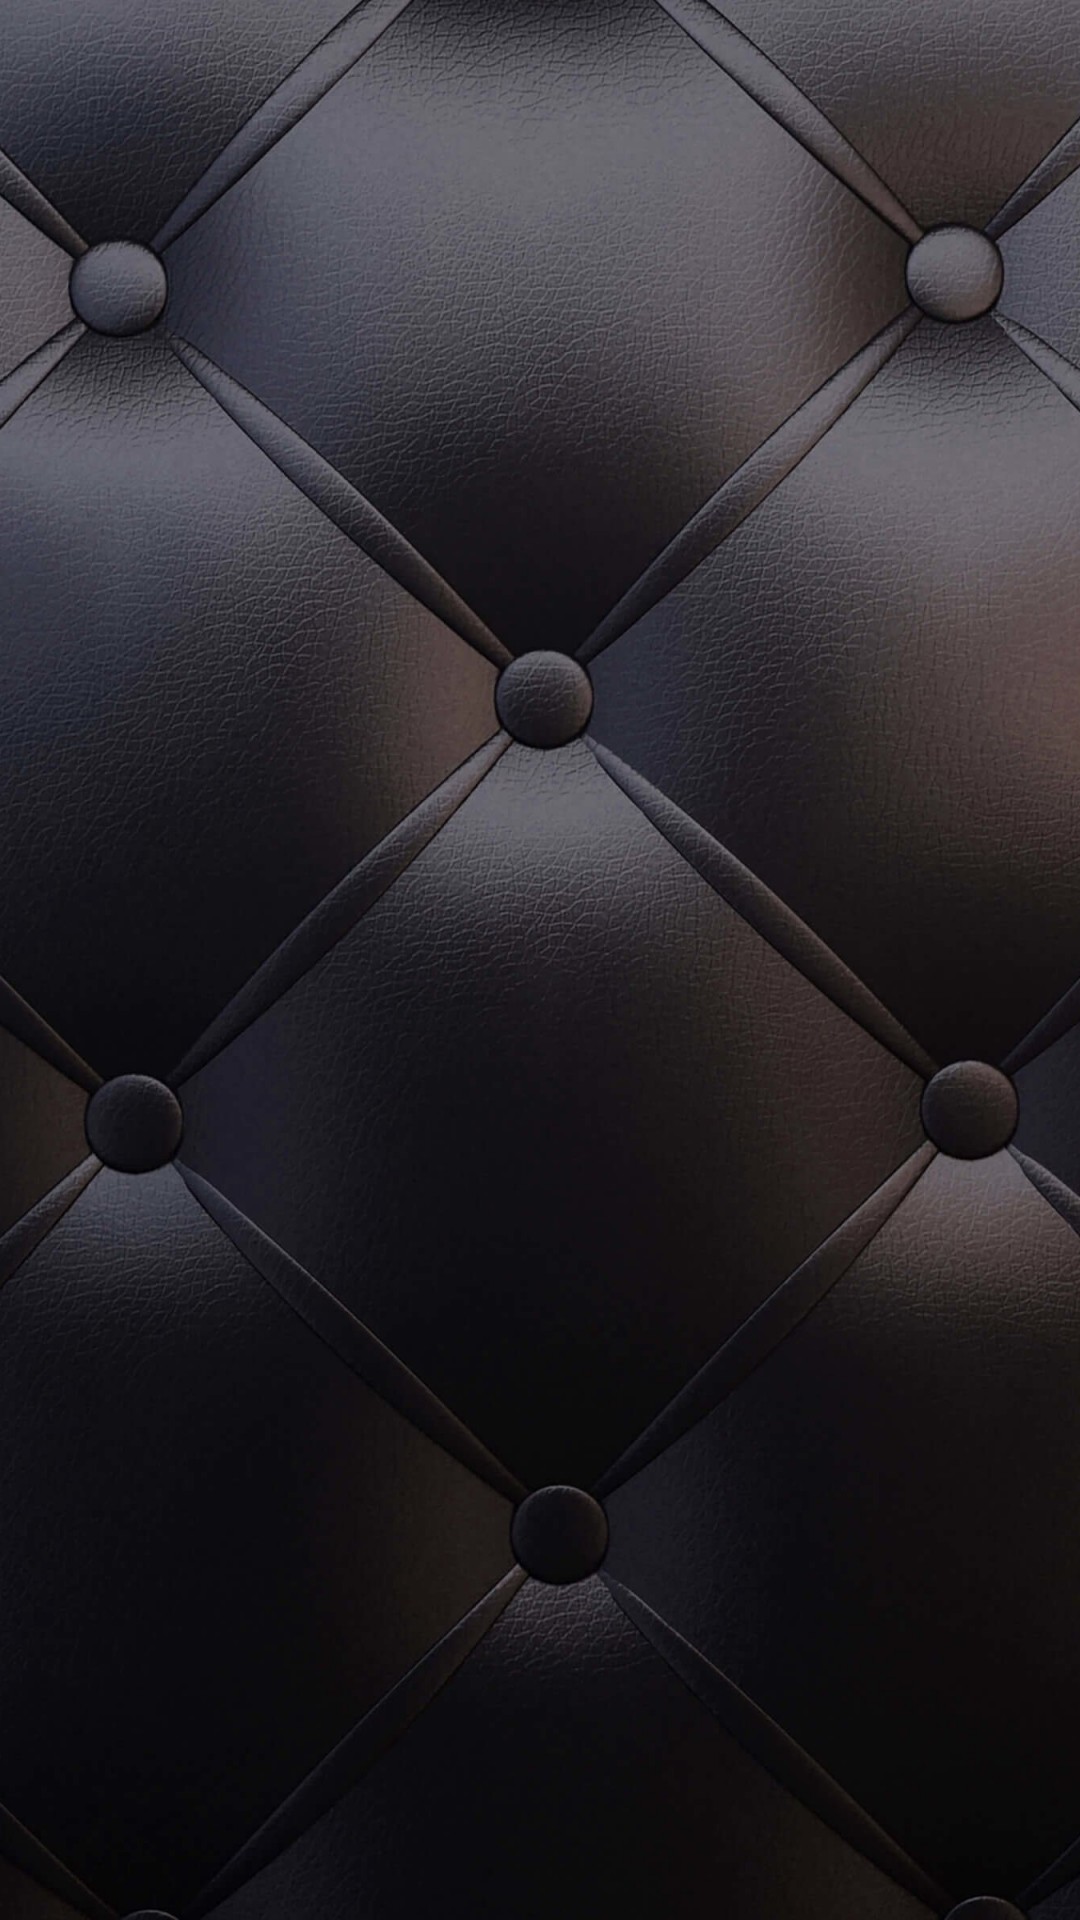 Black Leather Vintage Sofa Wallpaper for Motorola Moto X